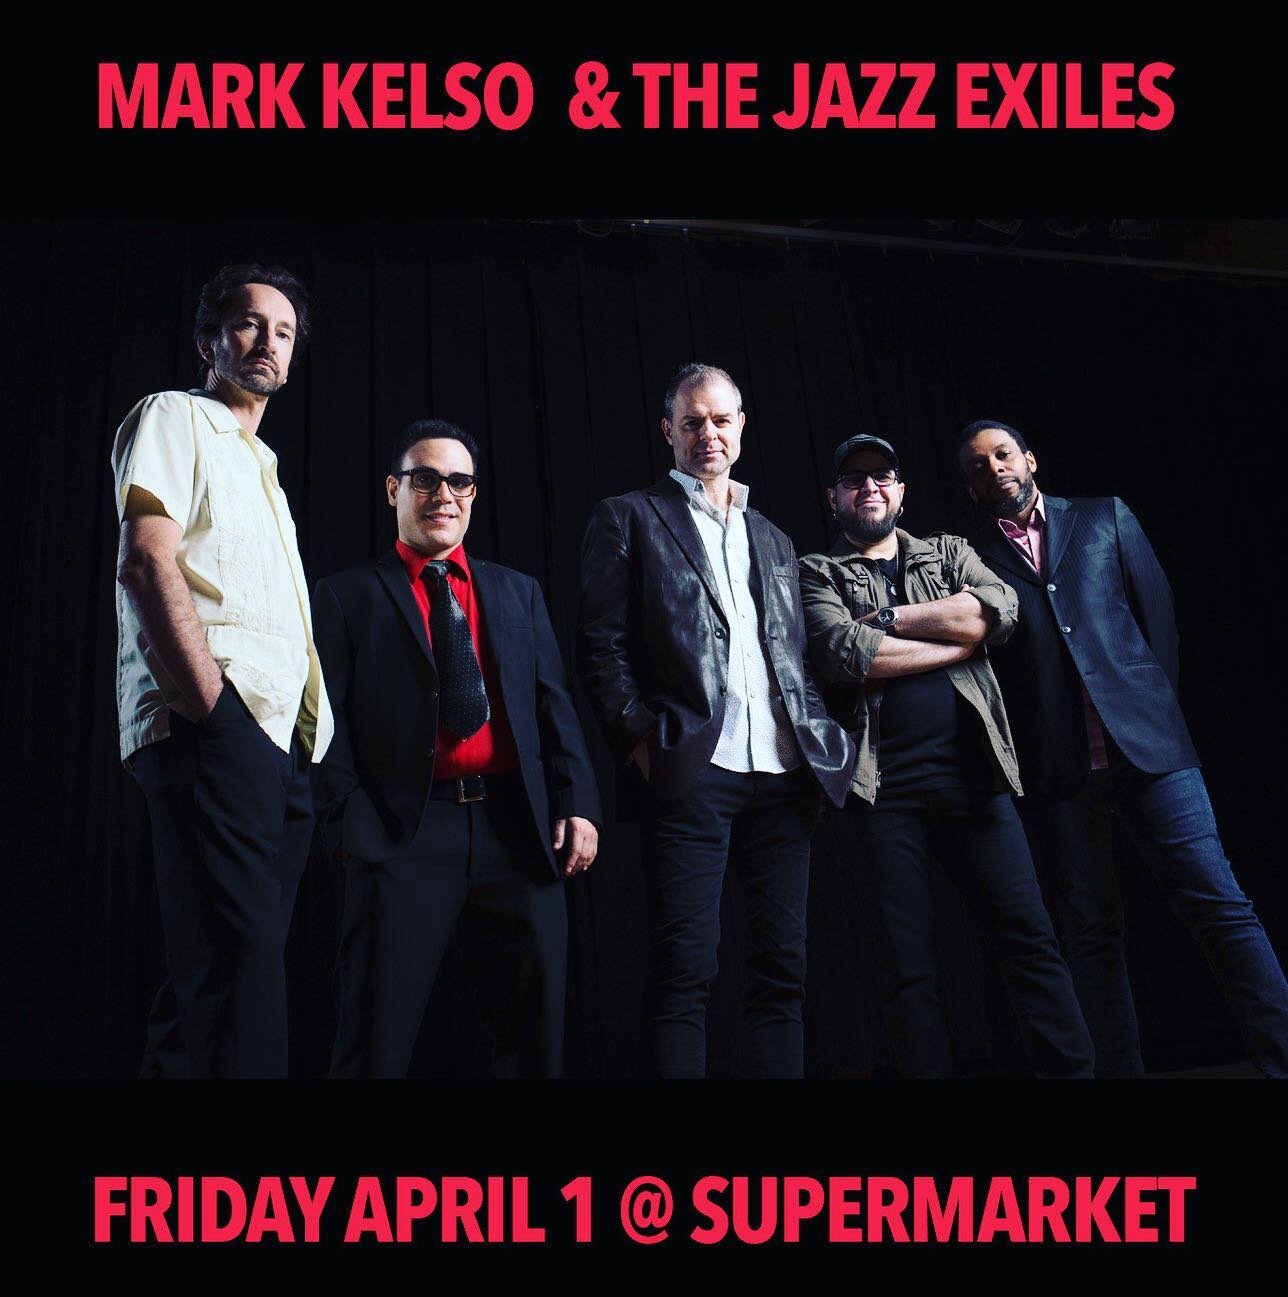 Canadian #jazz supergroup @markkelsodrums &amp; the Jazz Exiles swing into @supermkttoronto this Friday #april 1. With @zane.jazz Kismet Group. $15 #advance $20 door. #jazzintoronto #livemusic #downtowntoronto #kensingtonmarket  #torontobars cc @jazz